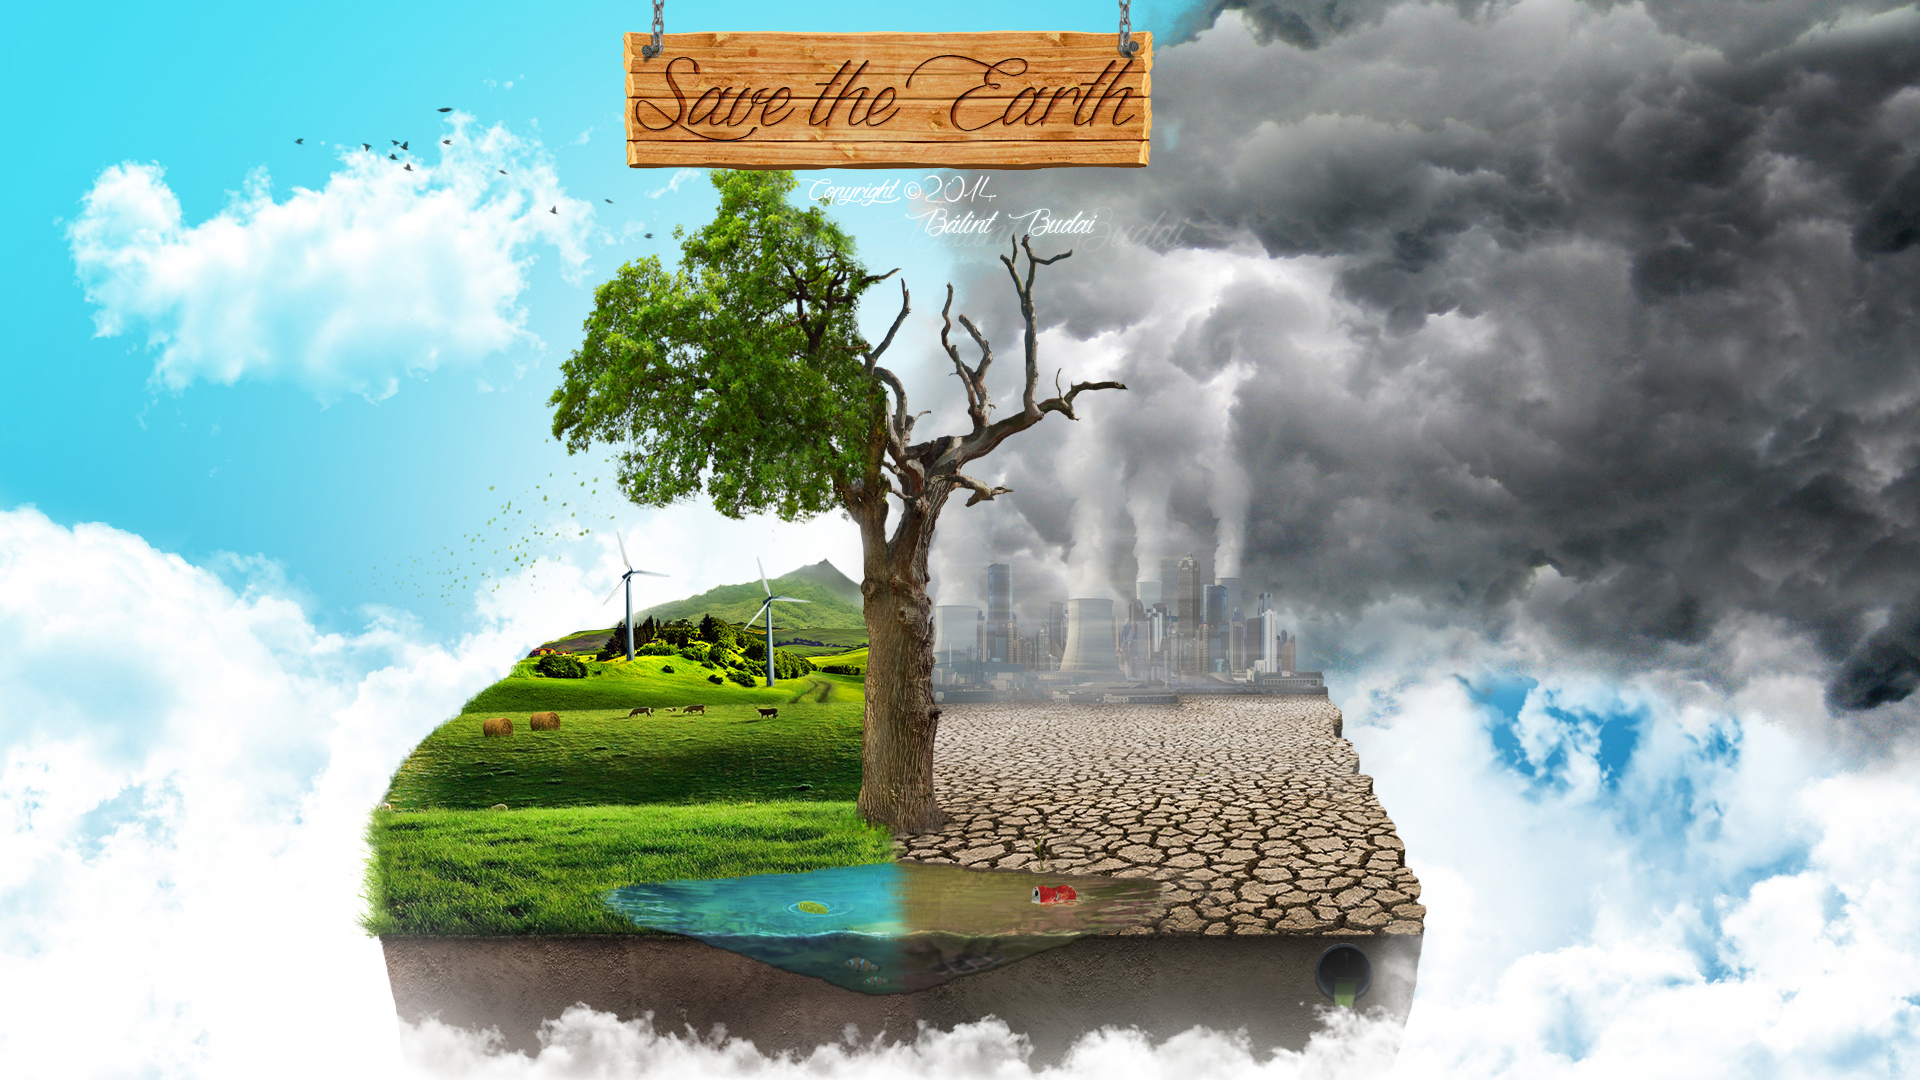 Environment Pollution Digital Art Artwork Nature Industrial Clouds Sky Blue Earth 2014 Year Balint B 1920x1080